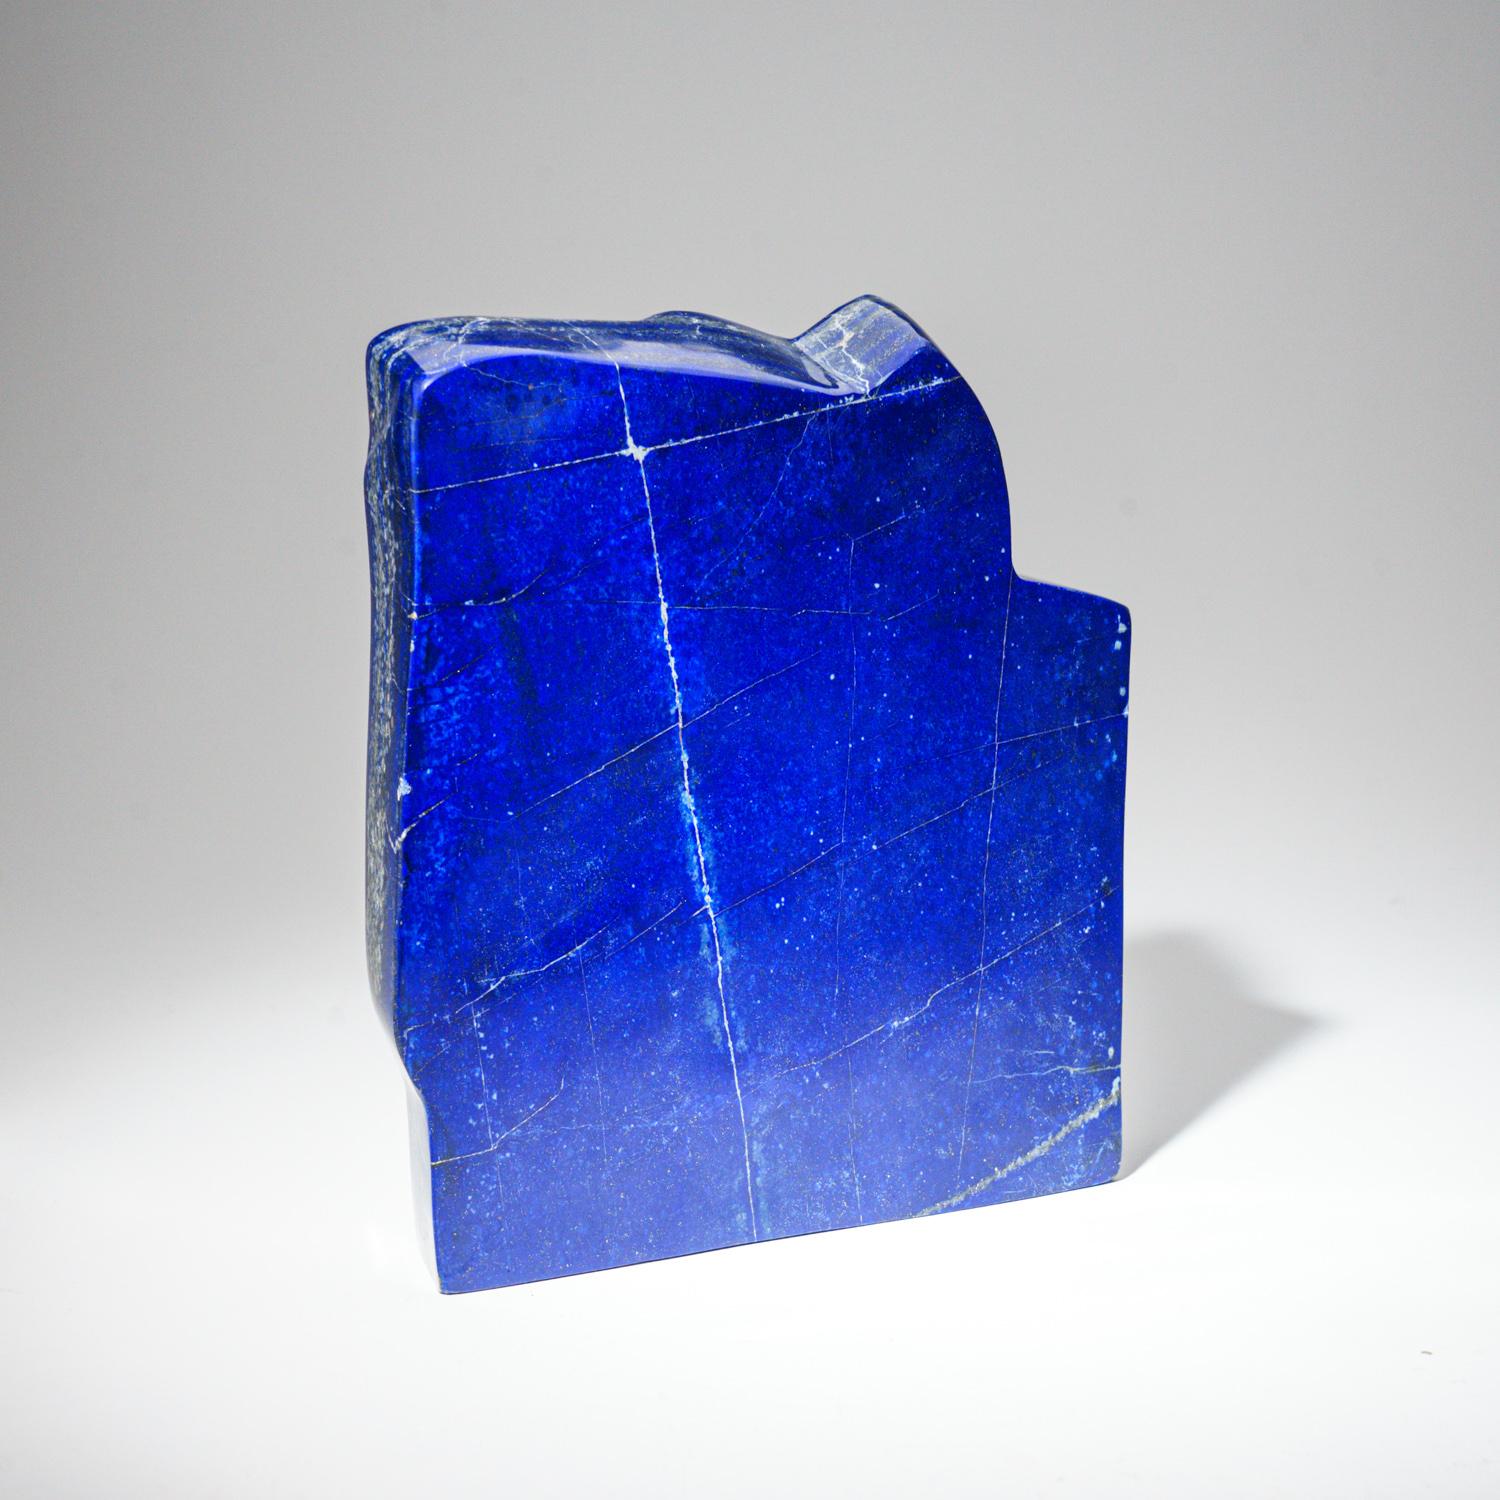 Polished Lapis Lazuli Freeform from Afghanistan (10.2 lbs) 1